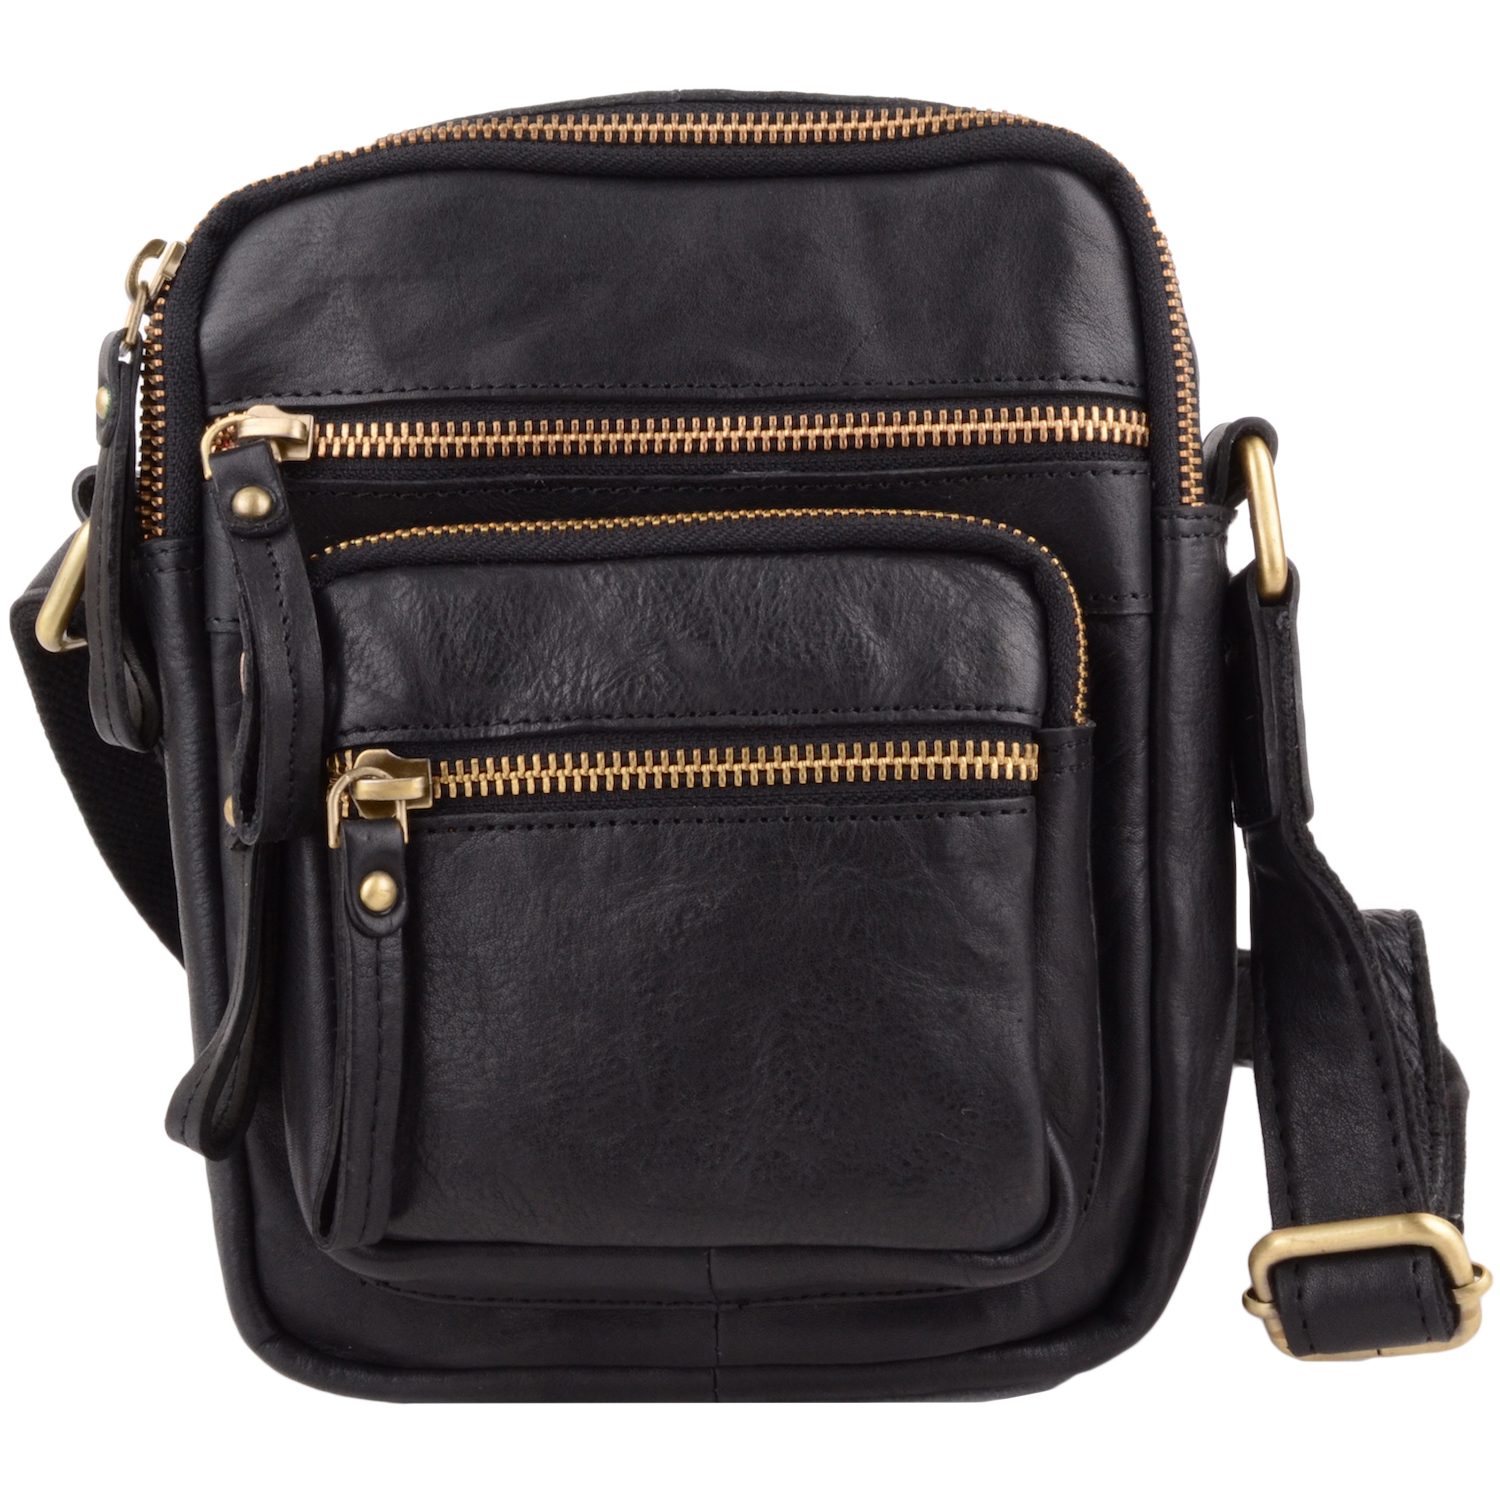 Convertible Leather Bag - Soft Leather Shoulder Bag | Laroll Bags